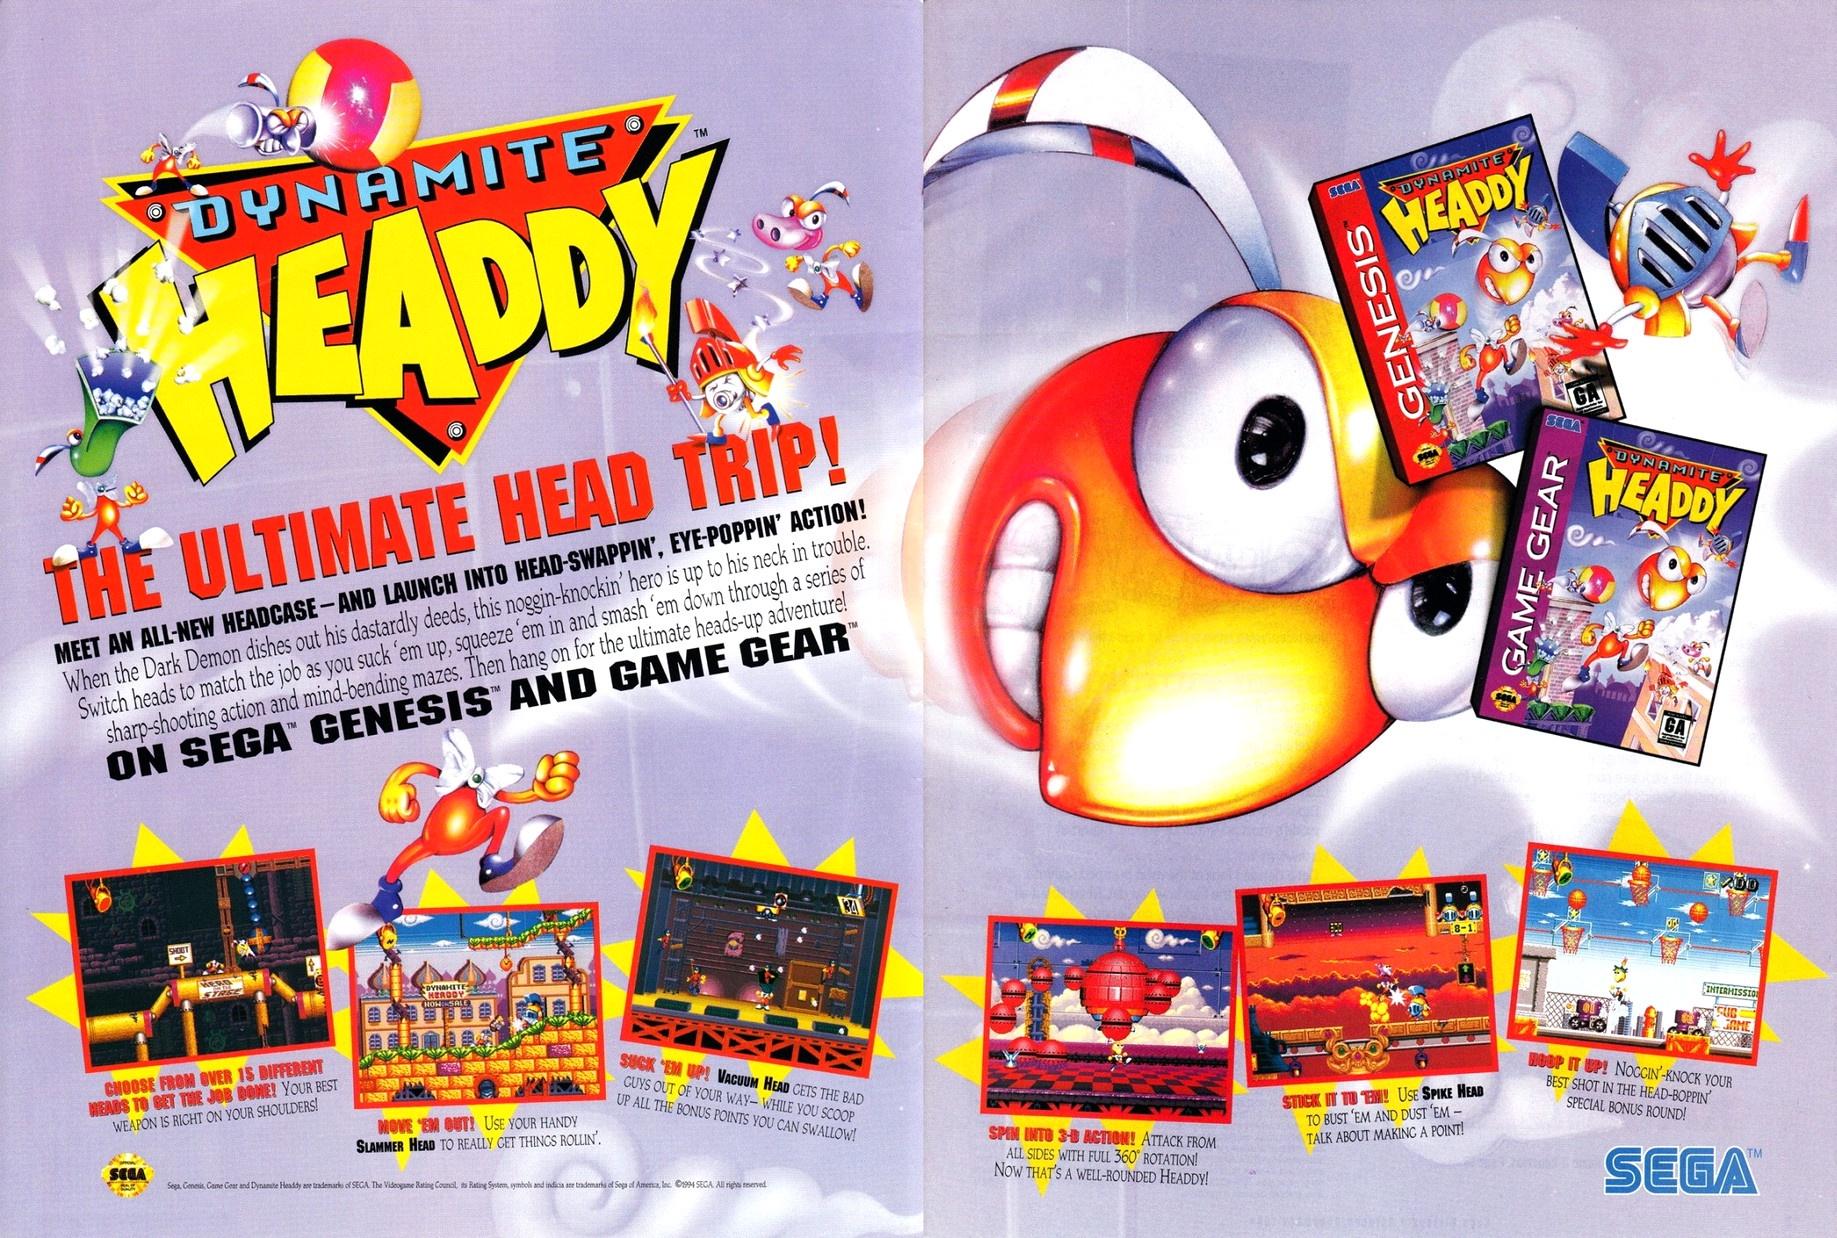 Dynamite Headdy – videogames advert in the mid-’90s (Sega Genesis/Mega Power, Game Equipment, Grasp System)